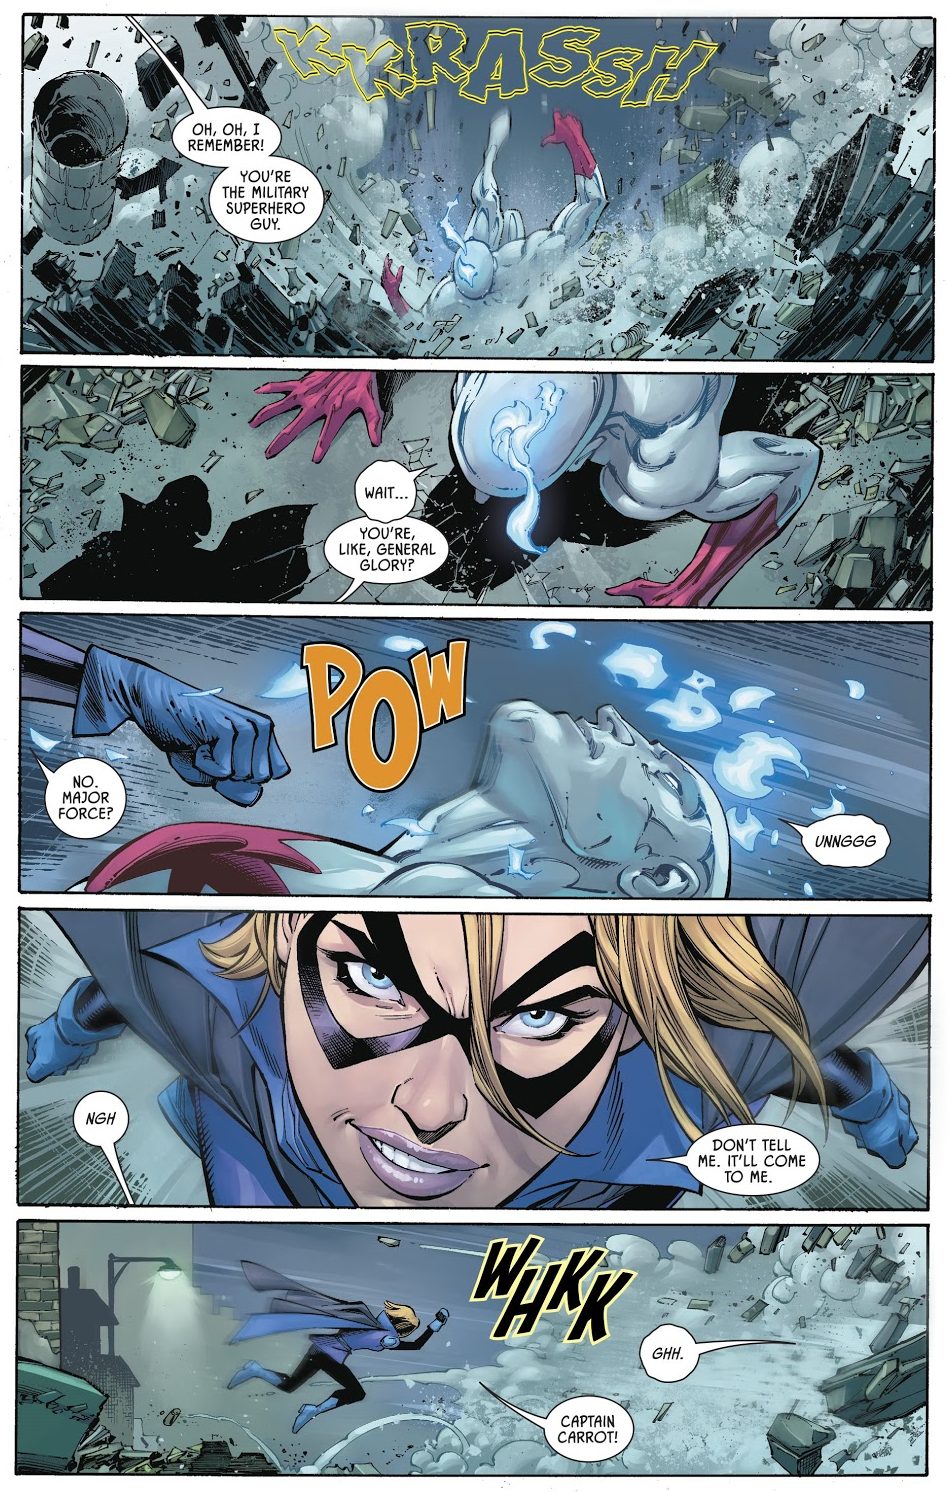 Gotham Girl VS Captain Atom 